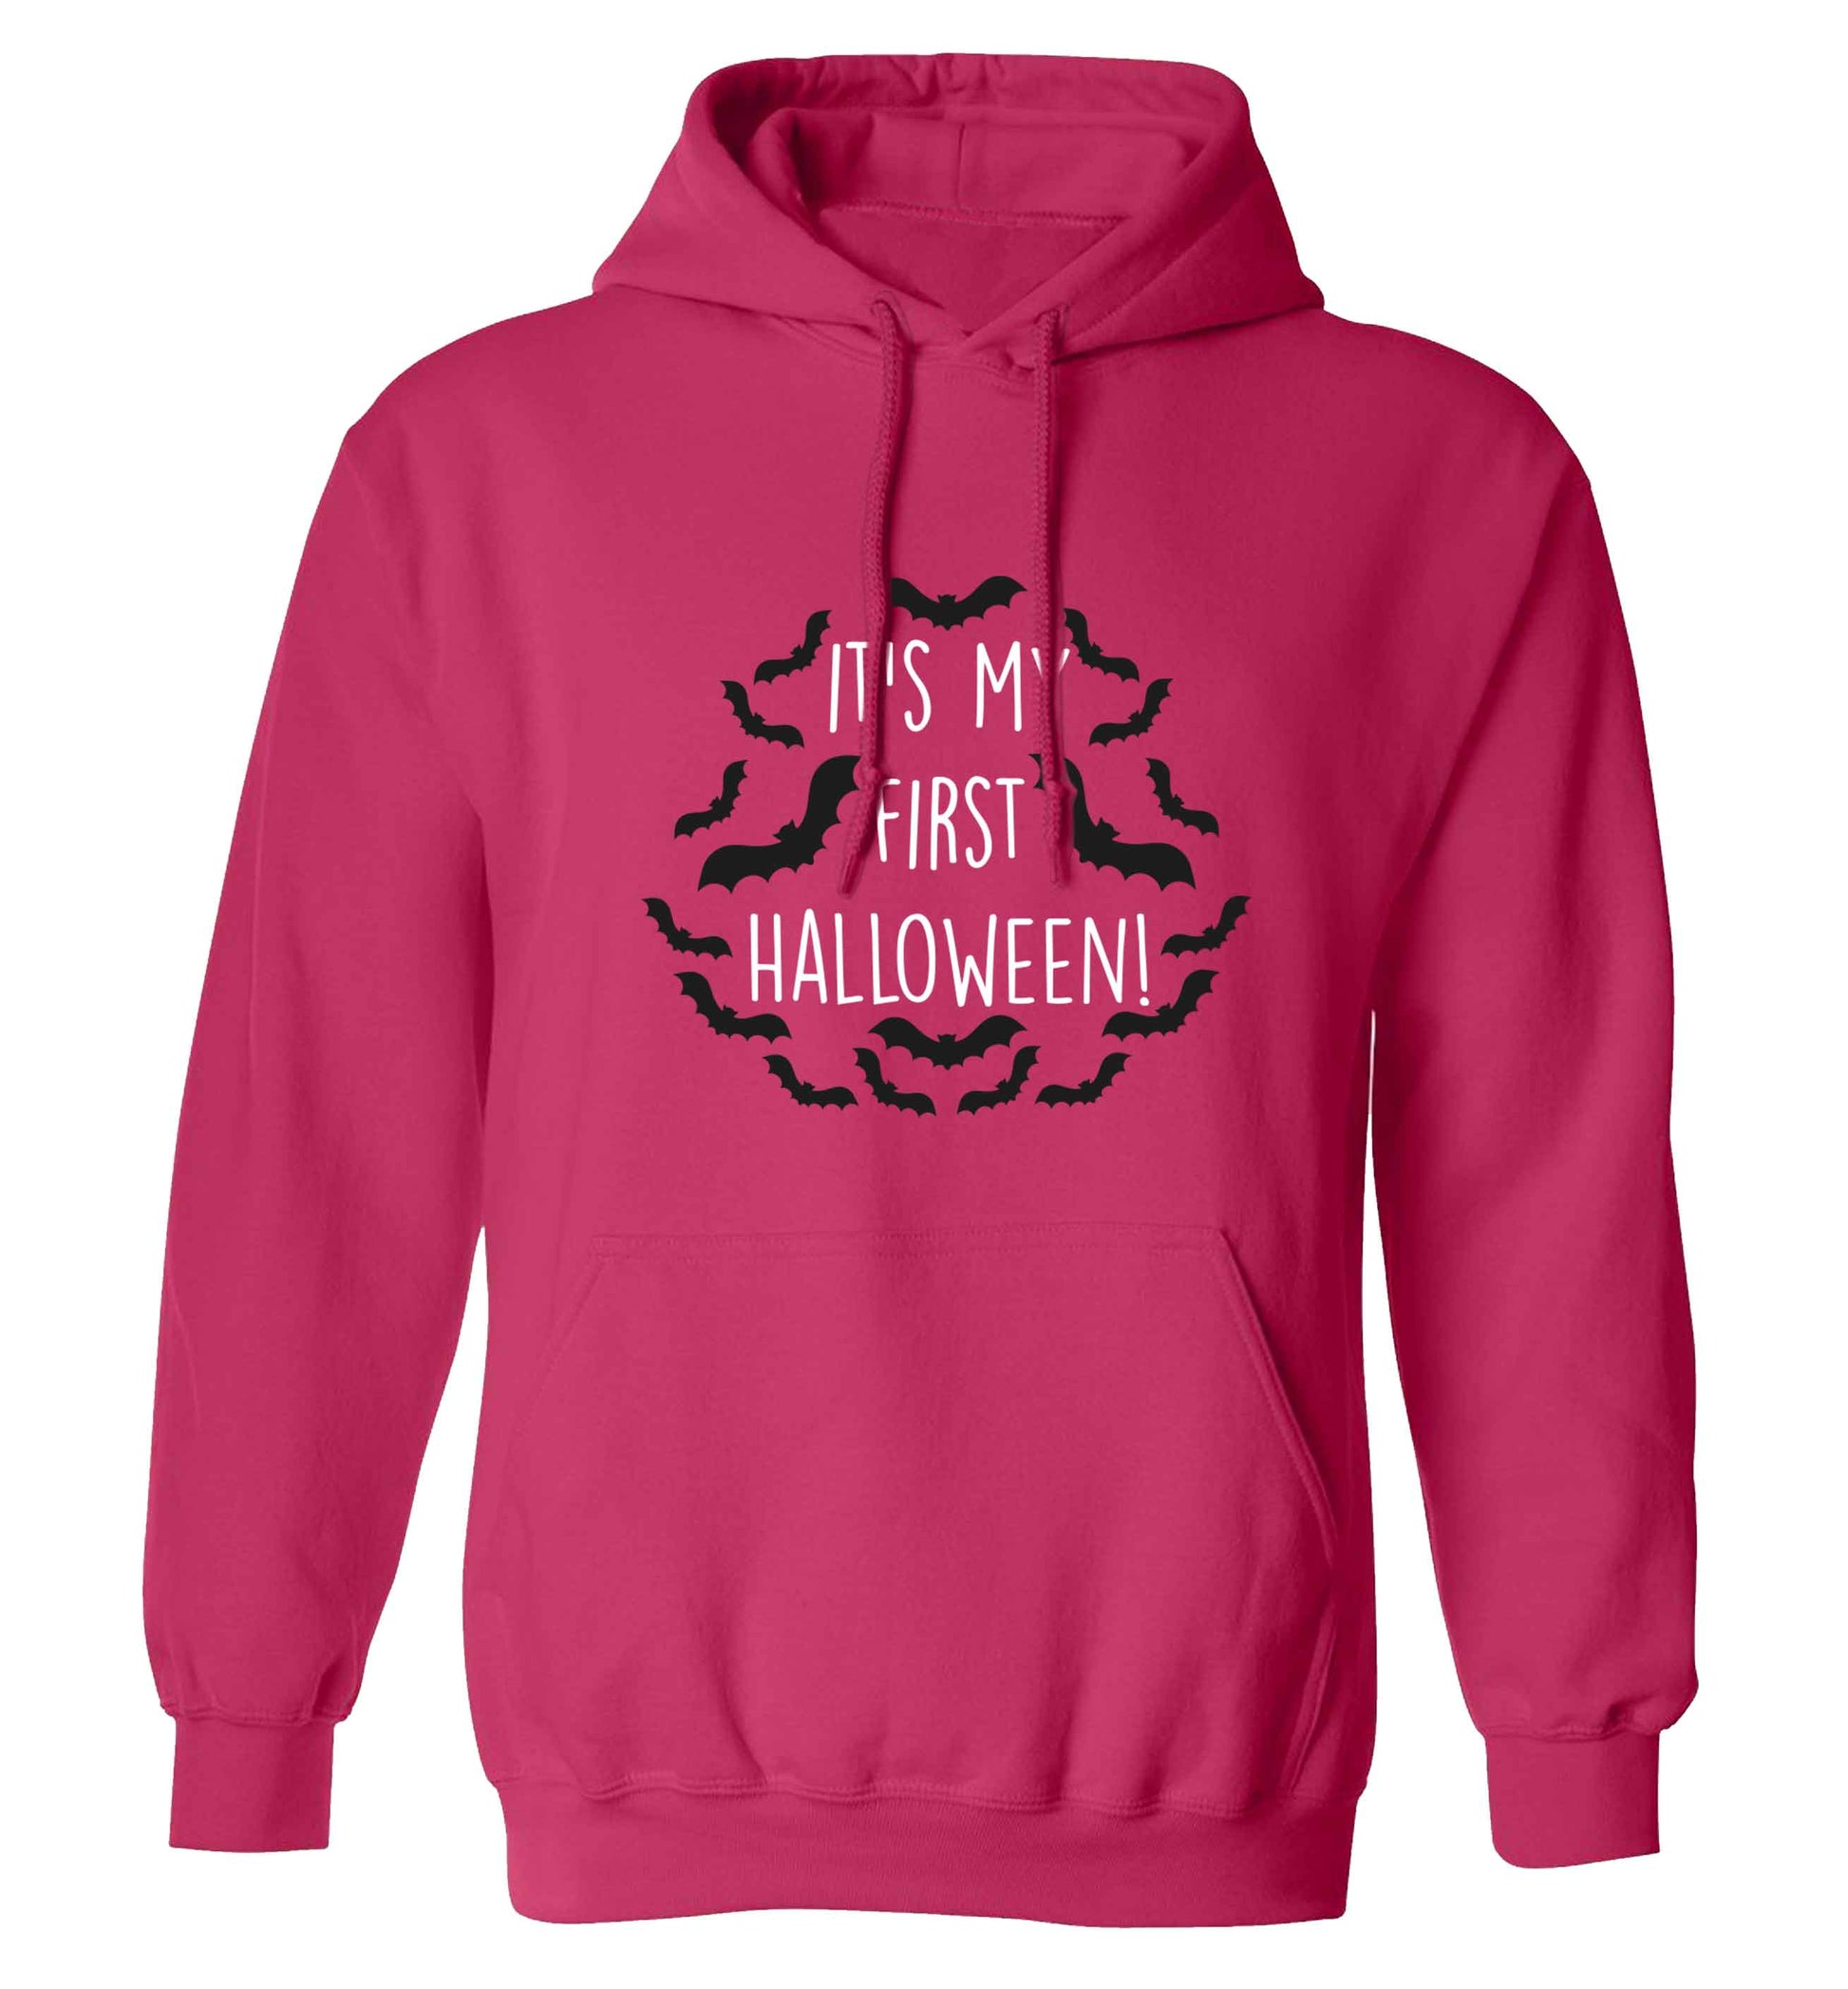 It's my first halloween - bat border adults unisex pink hoodie 2XL